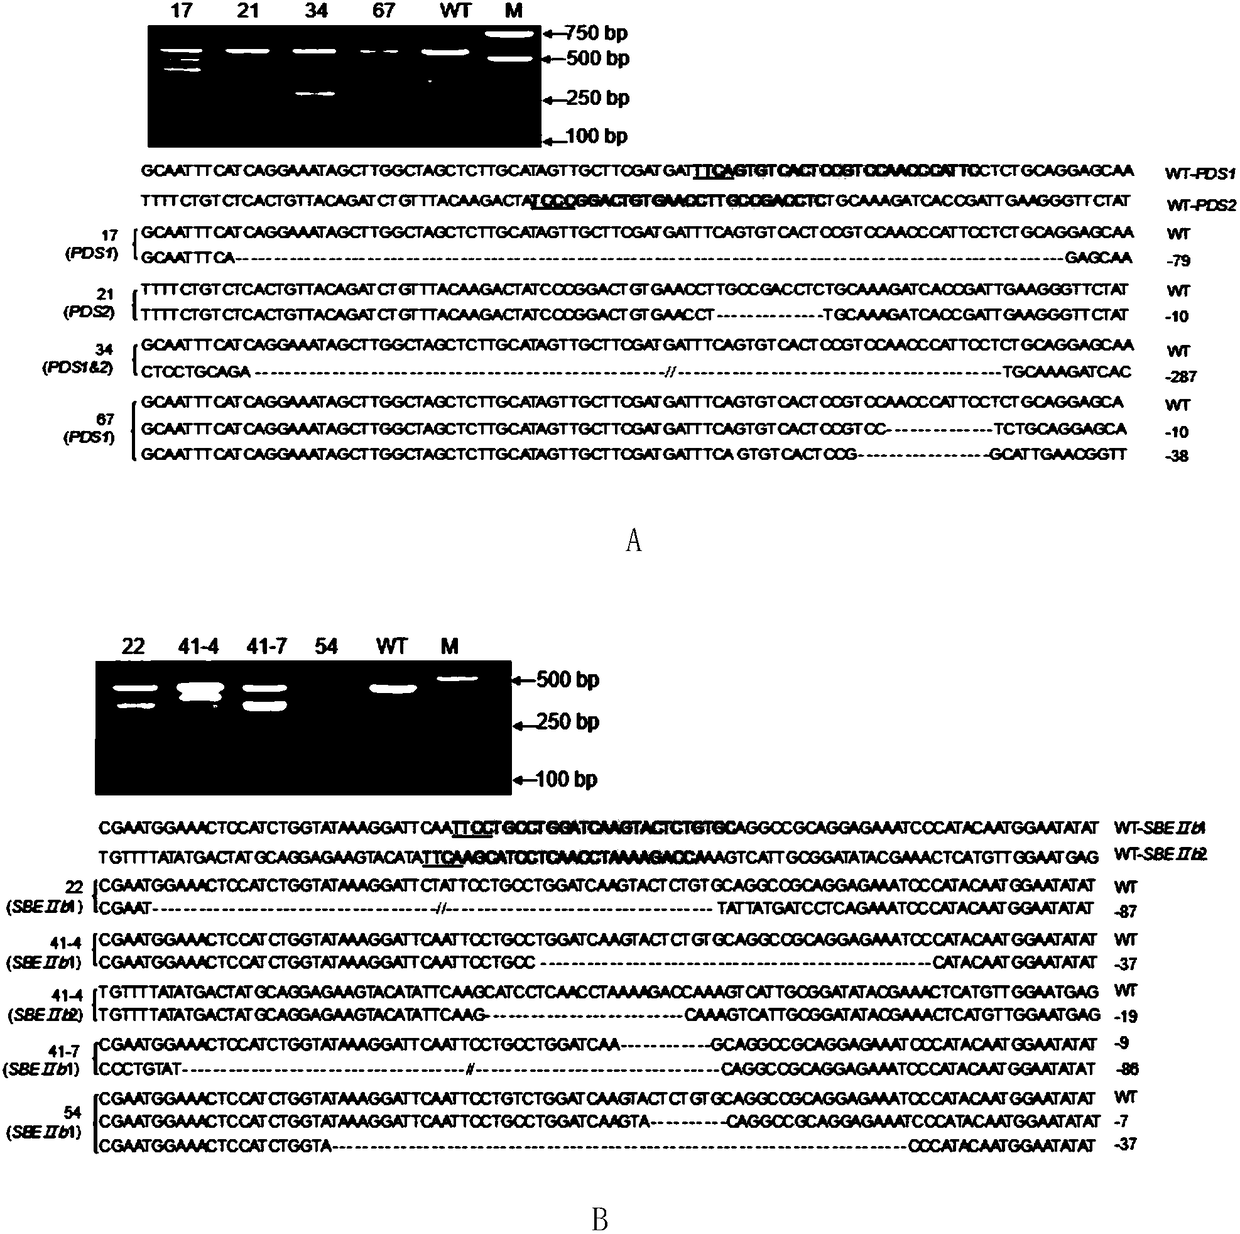 Application for using LbCpf1-RR mutant in CRISPR/Cpf1 system in plant gene editing